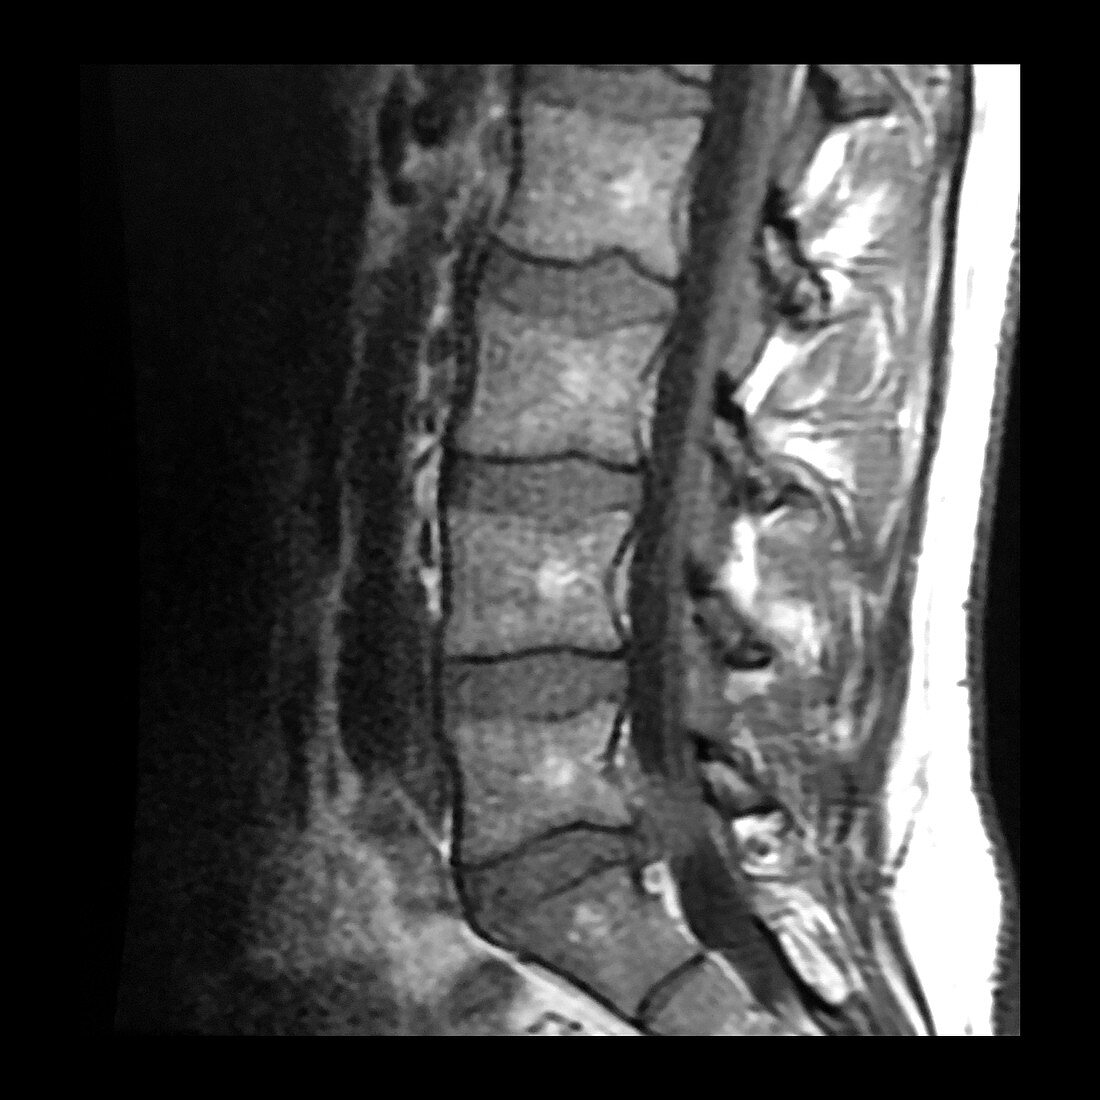 Large Lumbar Disc Herniation, MRI